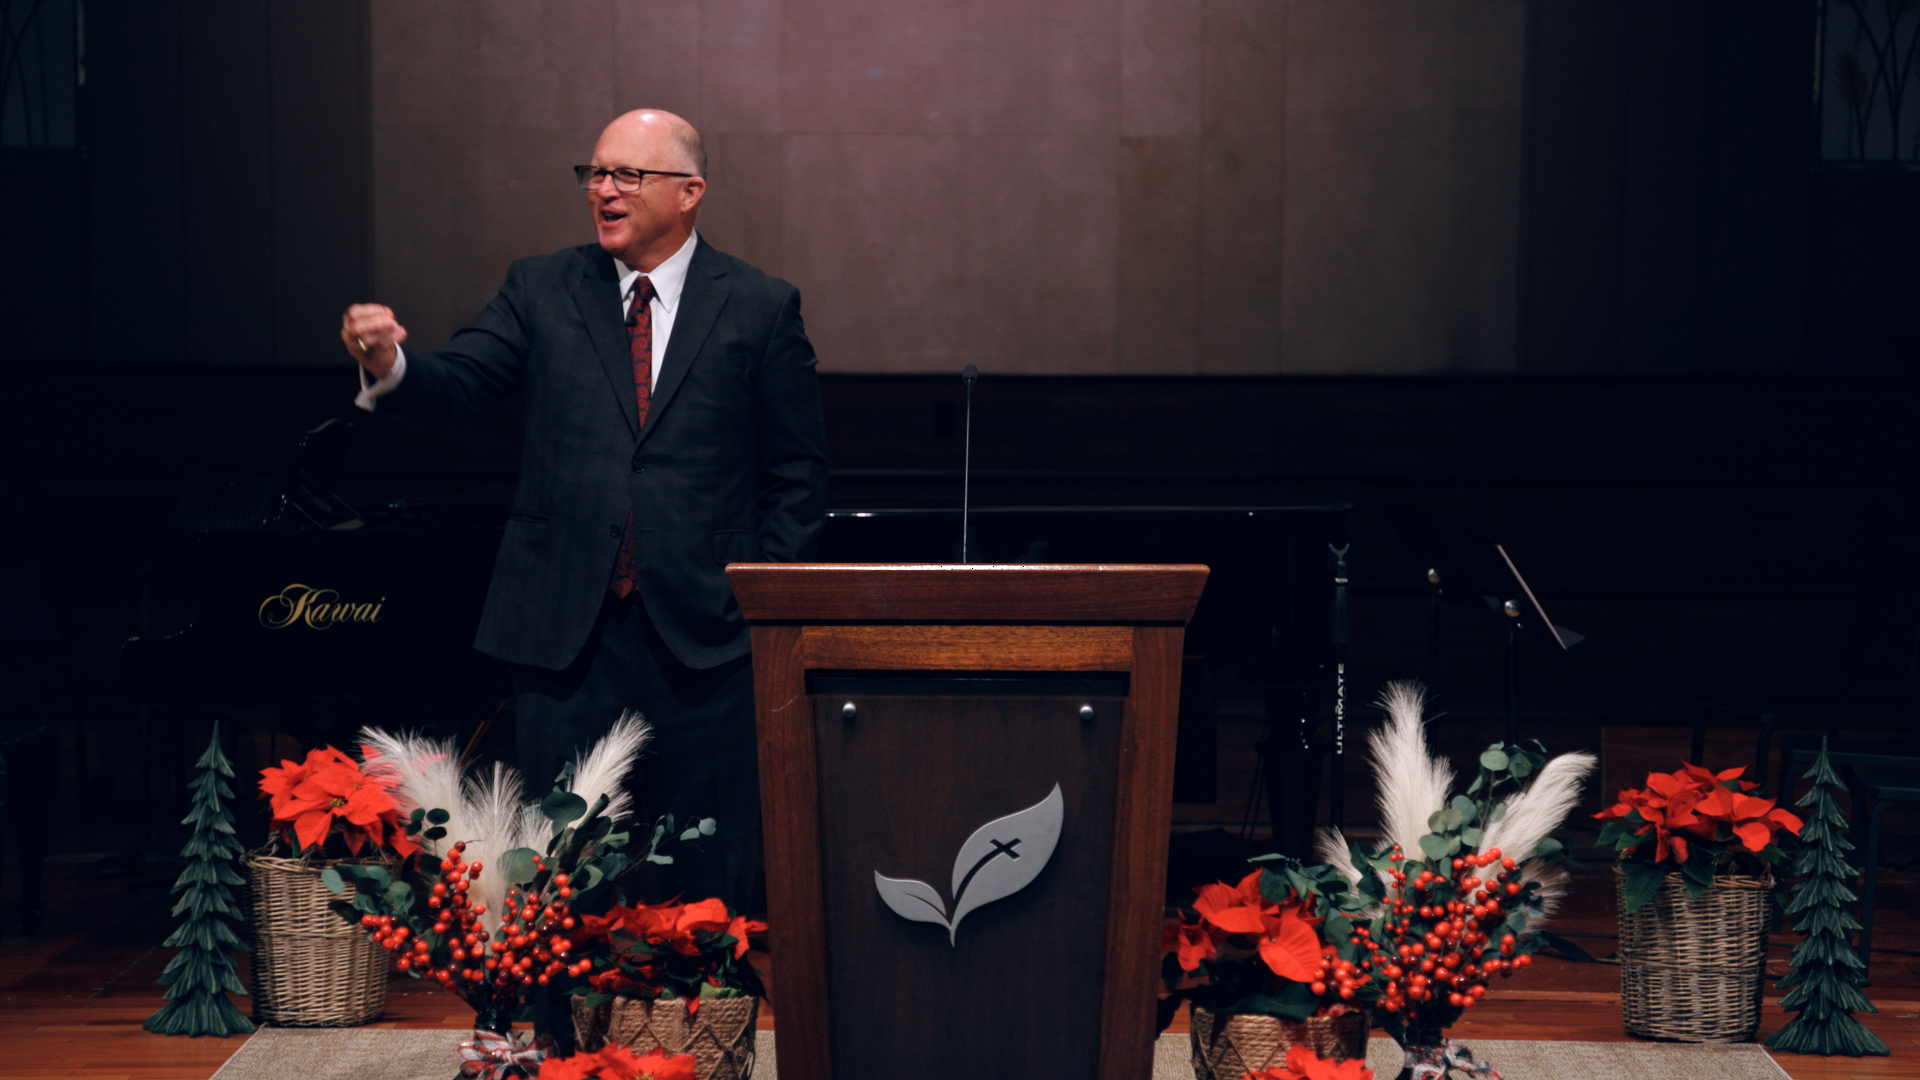 Pastor Paul Chappell: A Wonderful Presentation